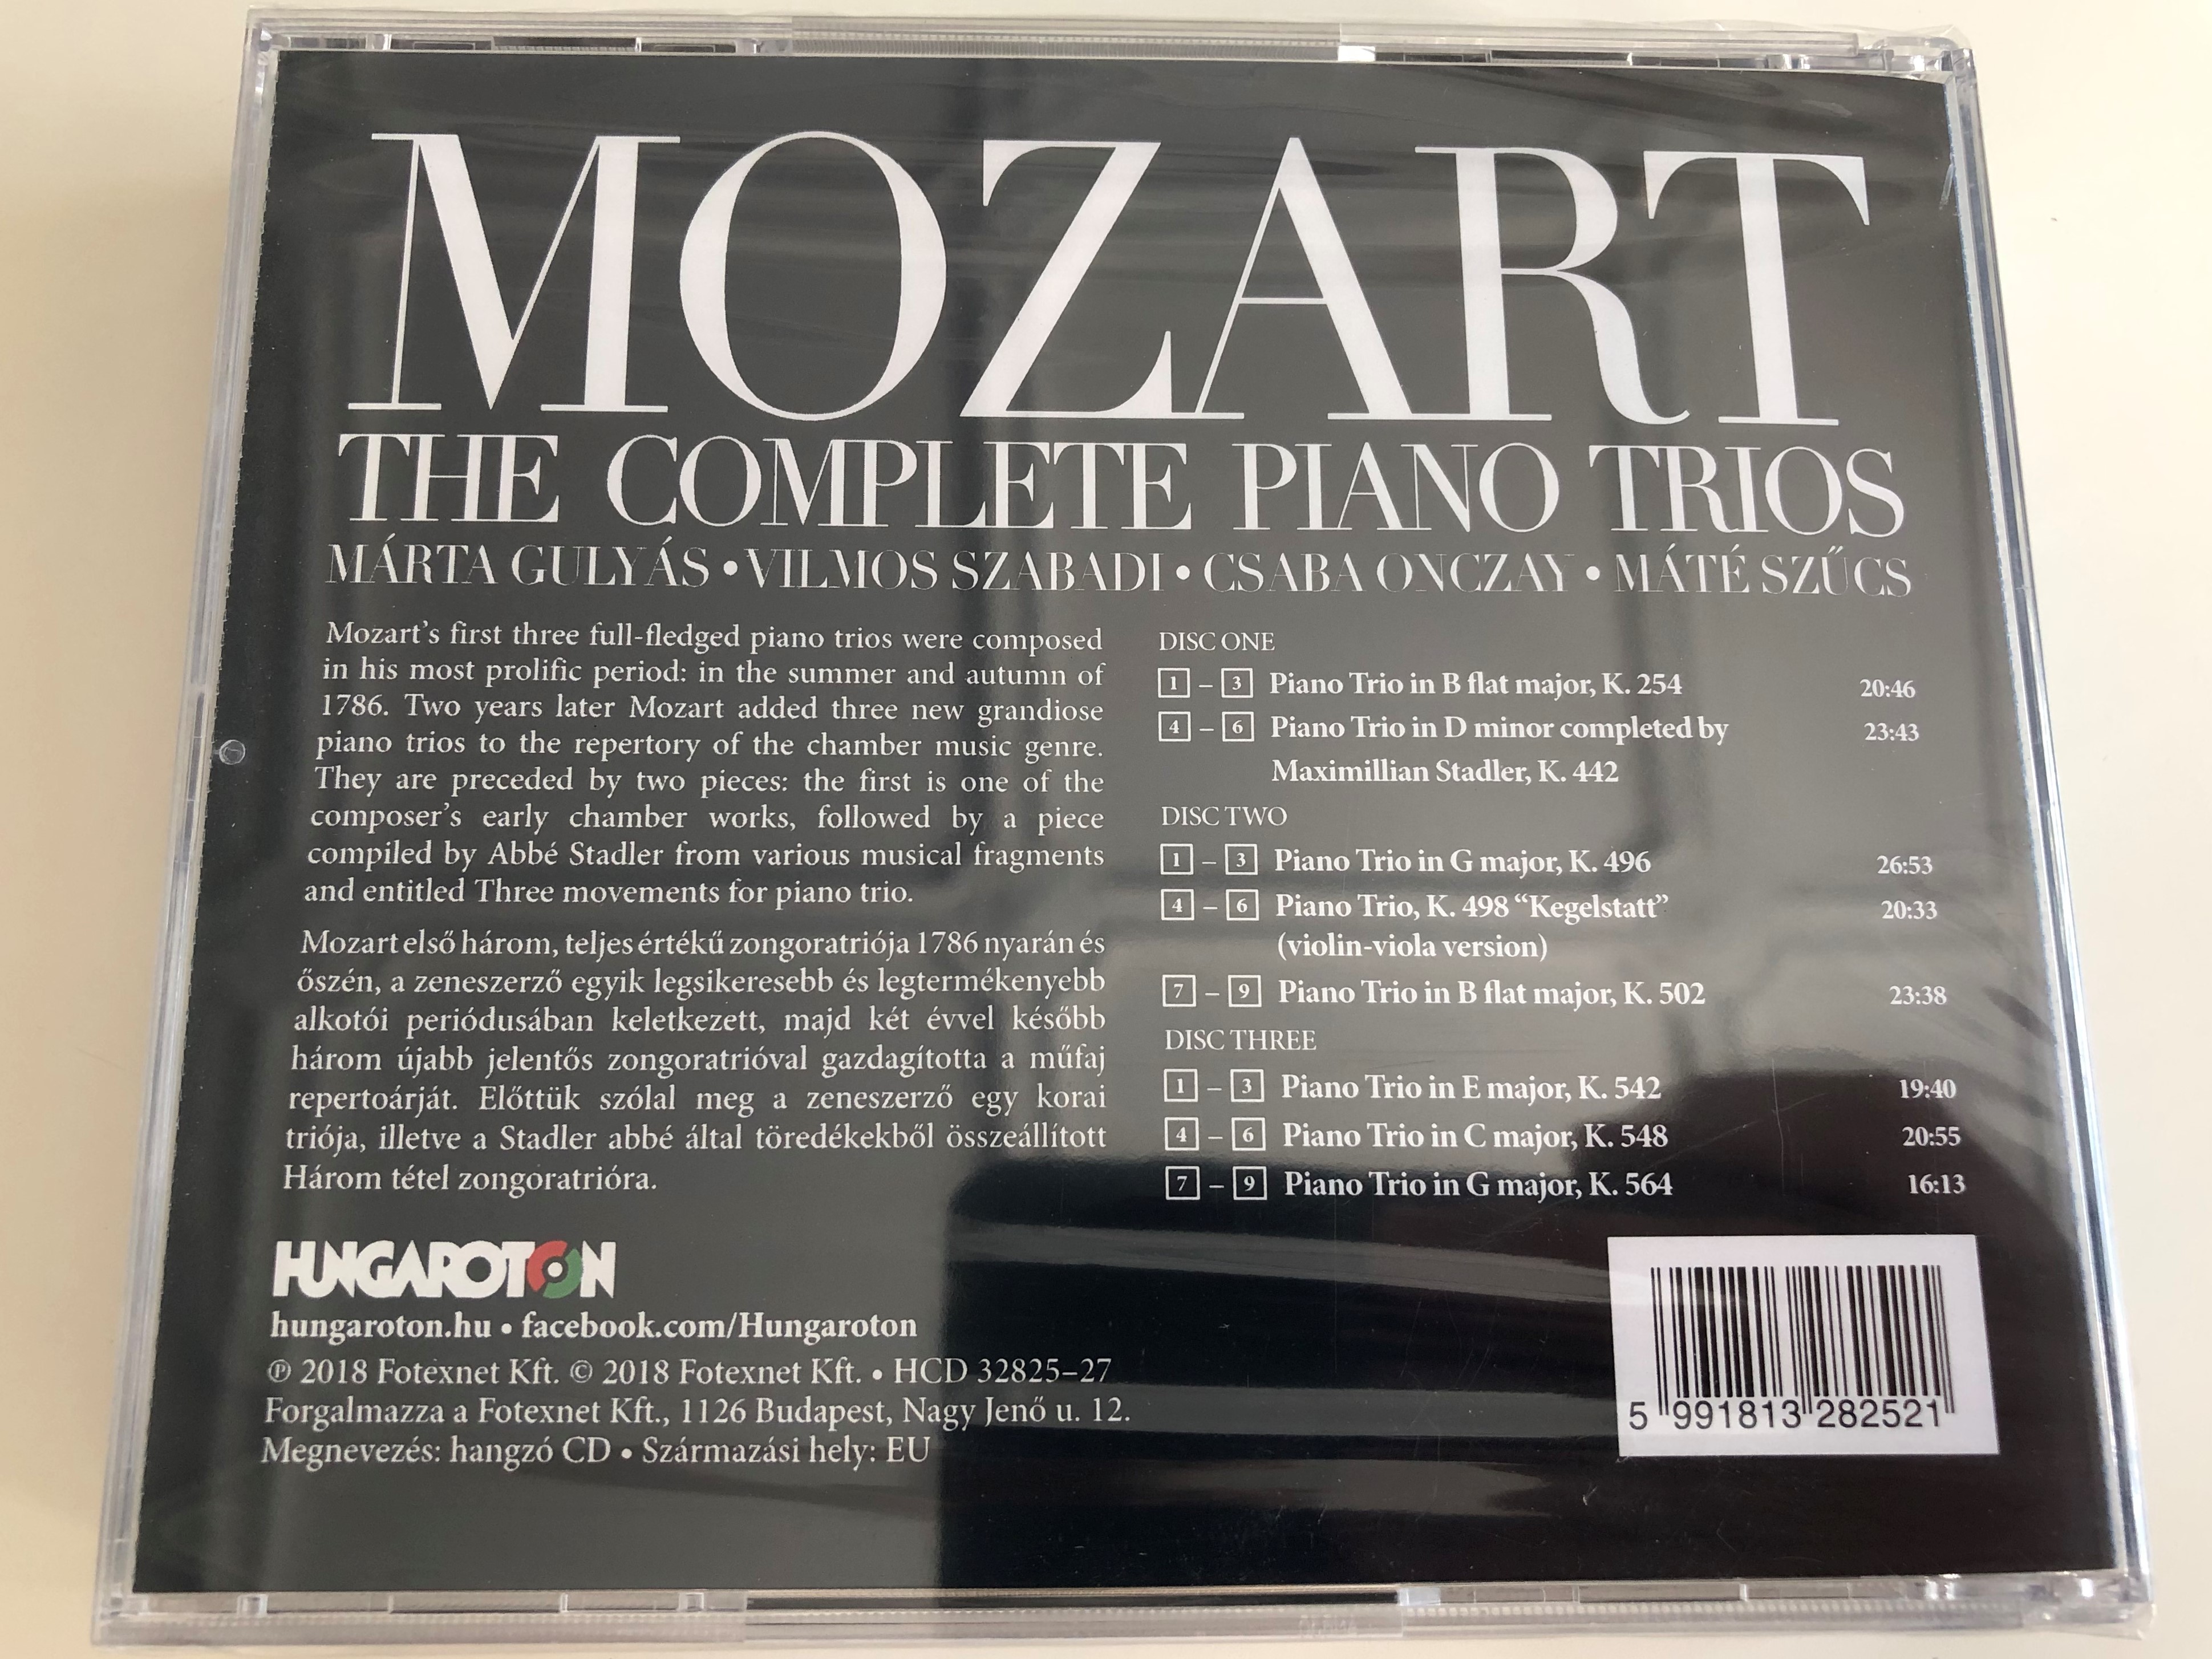 mozart-the-complete-piano-trios-m-rta-guly-s-vilmos-szabadi-csaba-onczay-m-t-sz-cs-hungaroton-3-disc-audio-cd-2018-3-.jpg